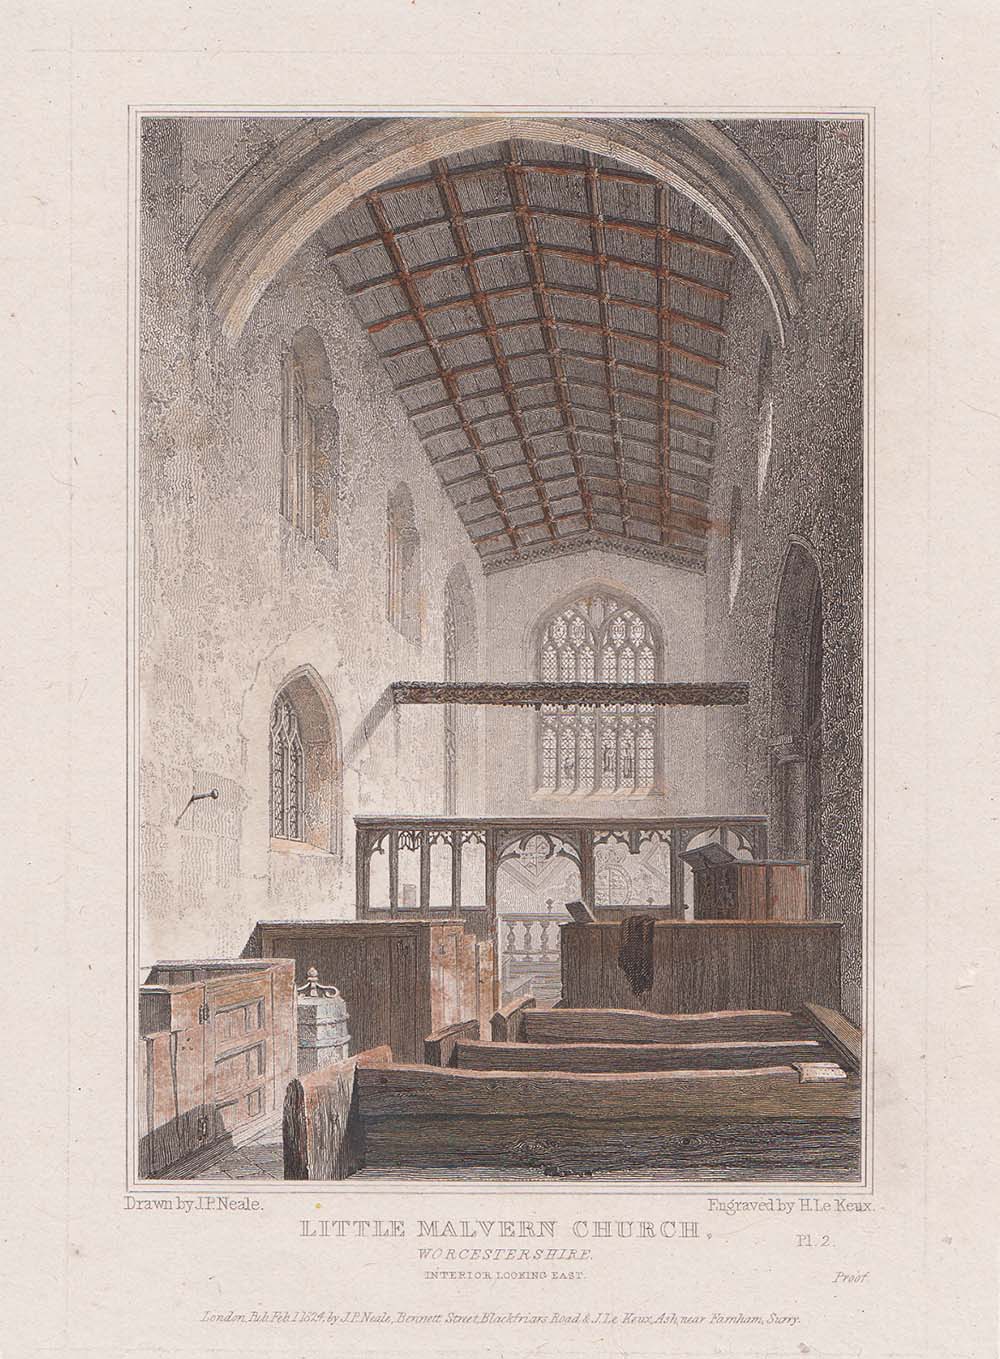 Little Malvern Church Worcestershire Interior looking East